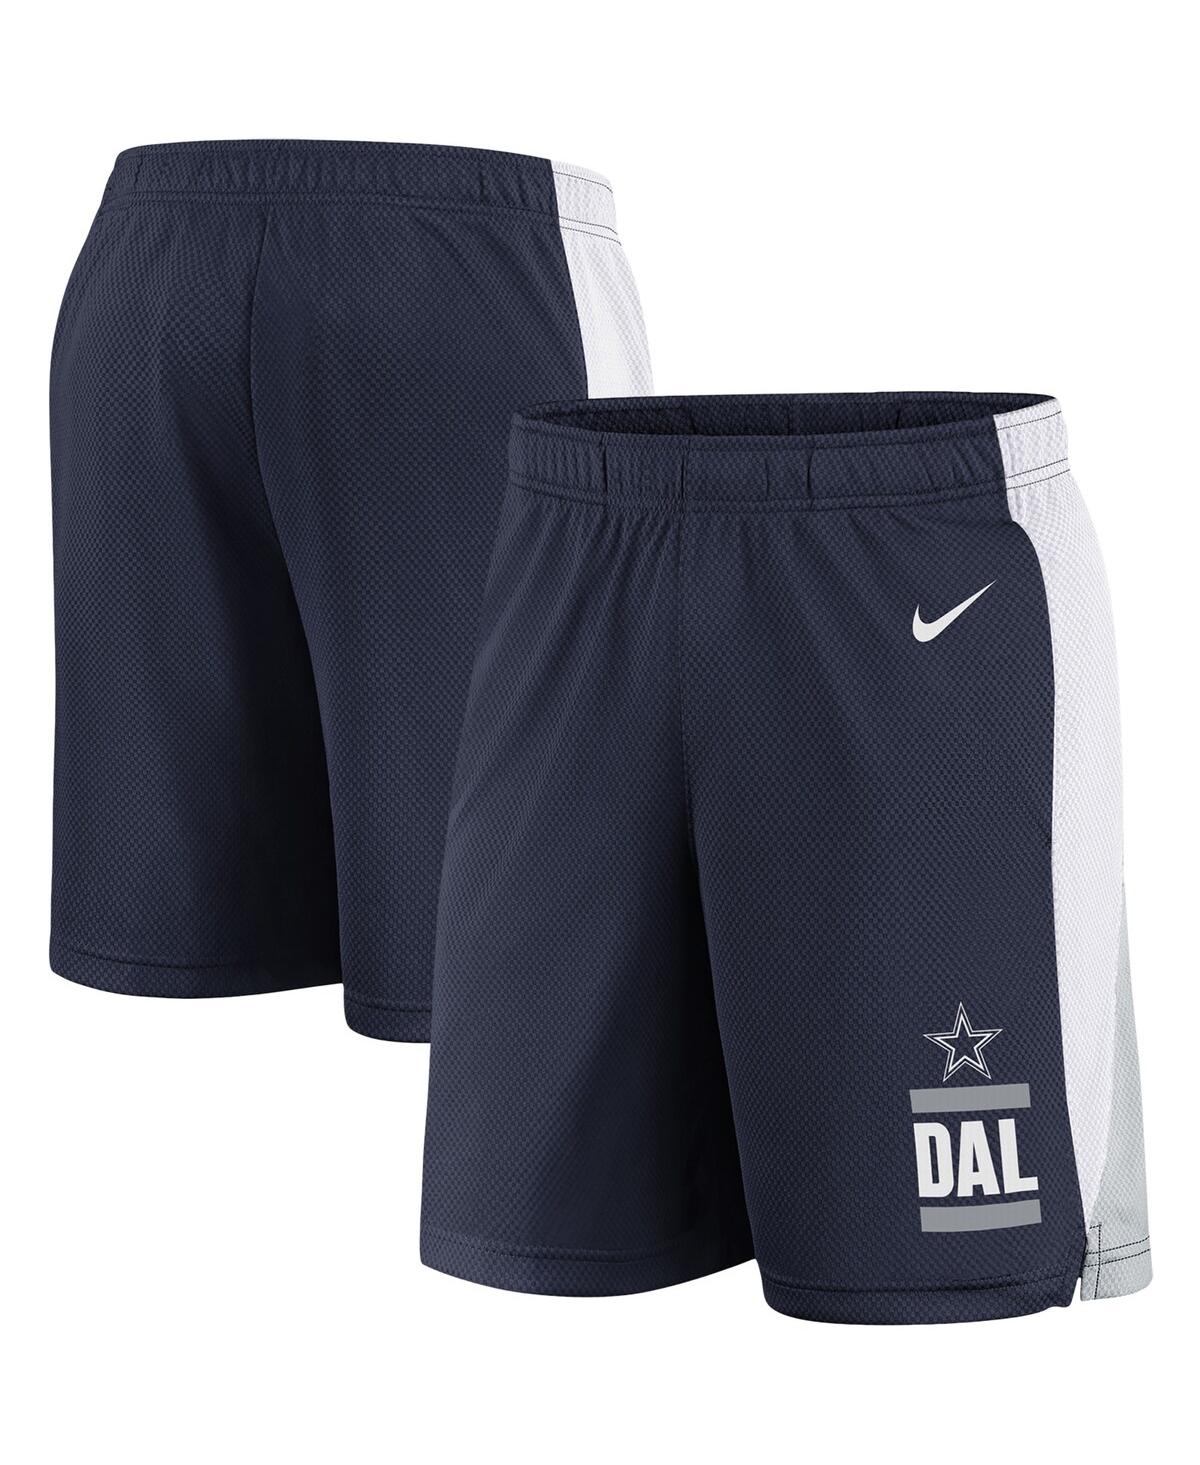 Youth Boys Nike Navy Dallas Cowboys Shorts